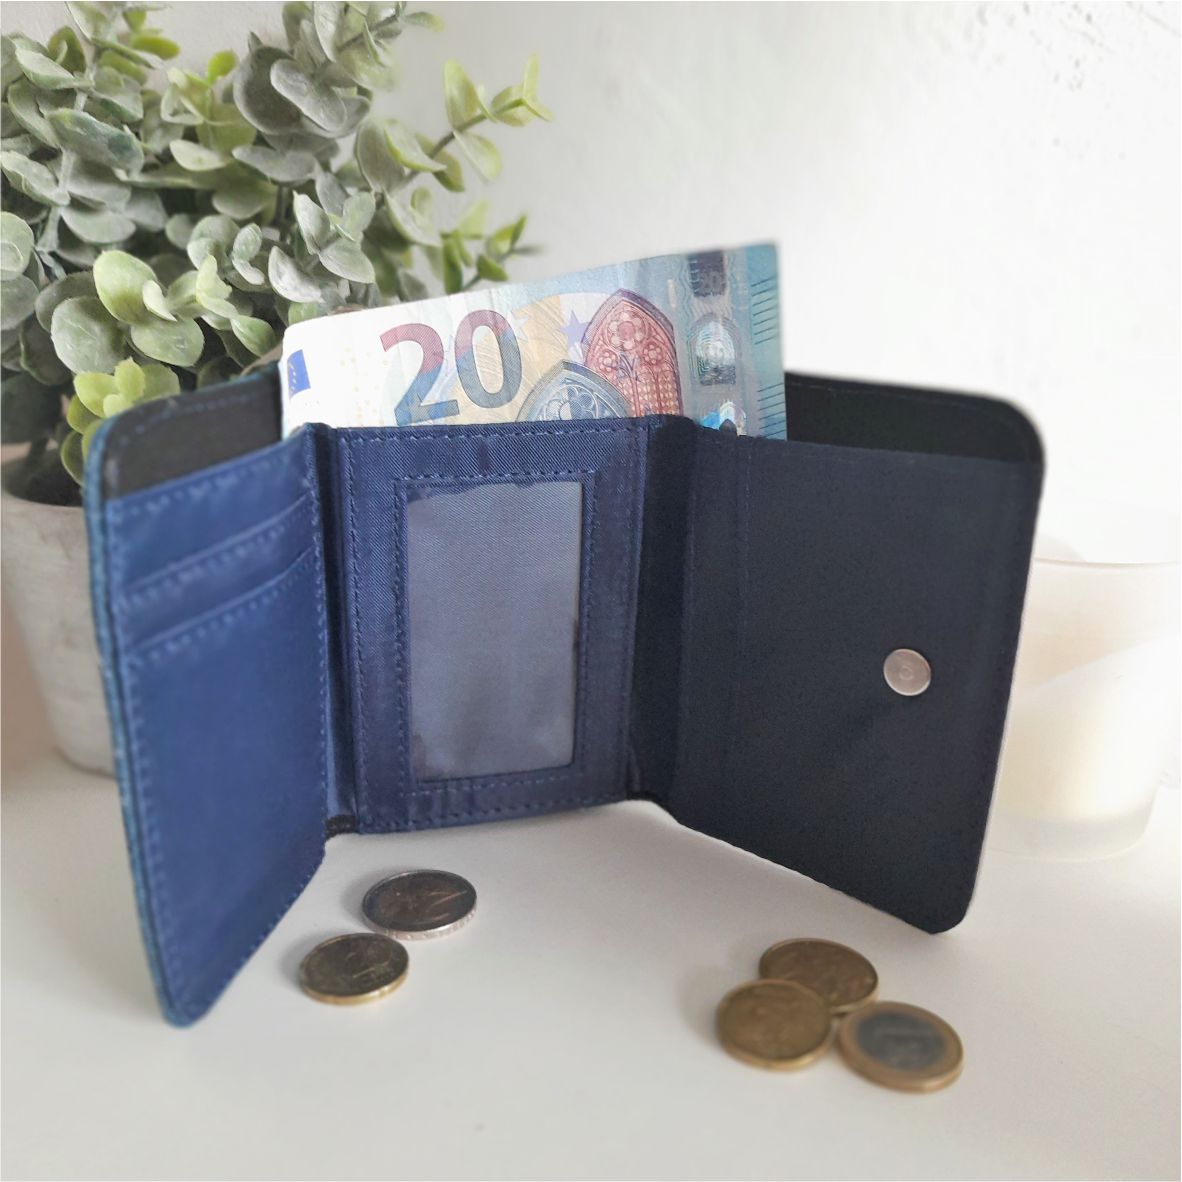 Textil Geldbörse "Löwe", jeansblau